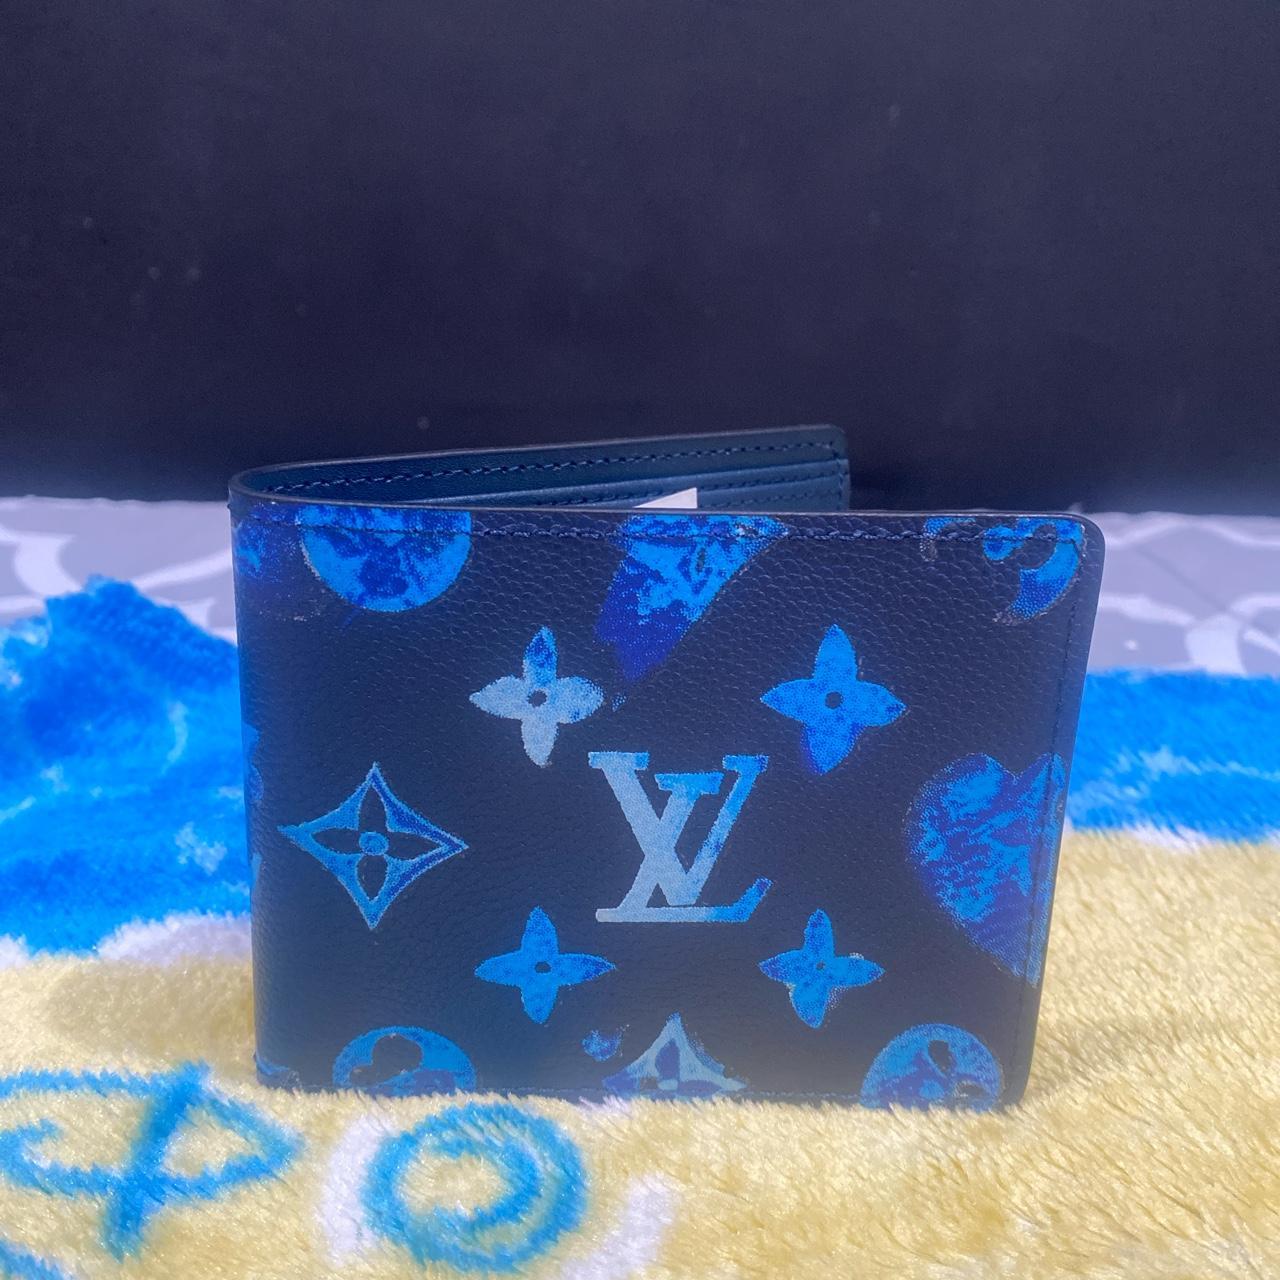 Louis Vuitton X Supreme Slender Wallet Red Epi - Depop